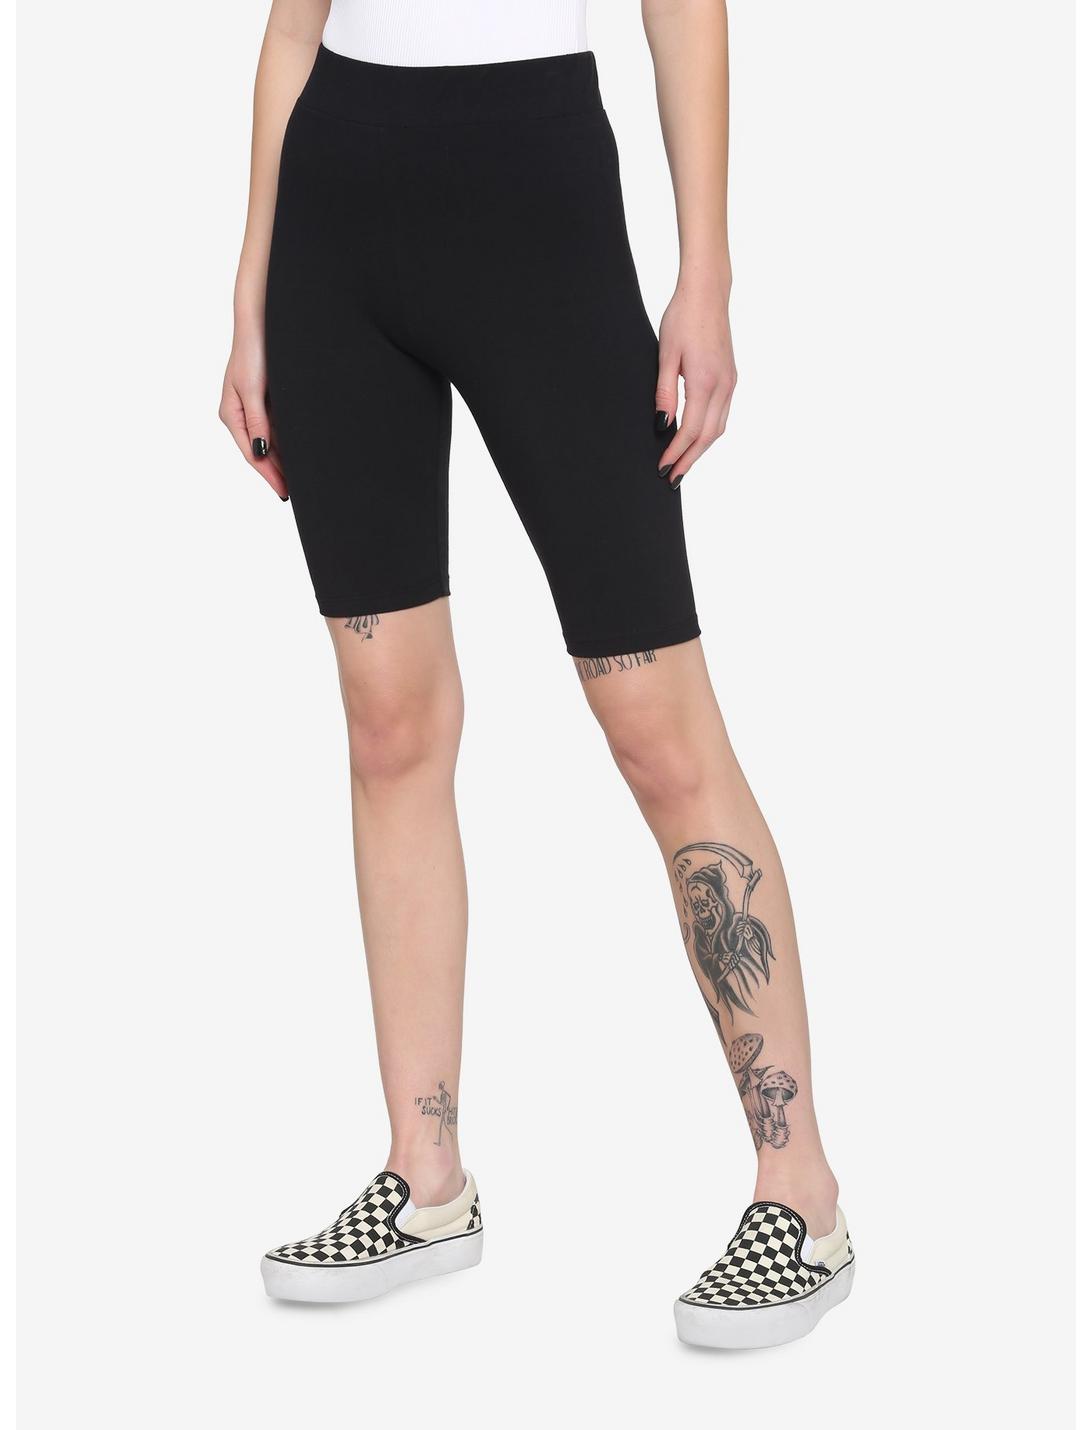 Black 9 Inch Inseam Bike Shorts, DEEP BLACK, hi-res